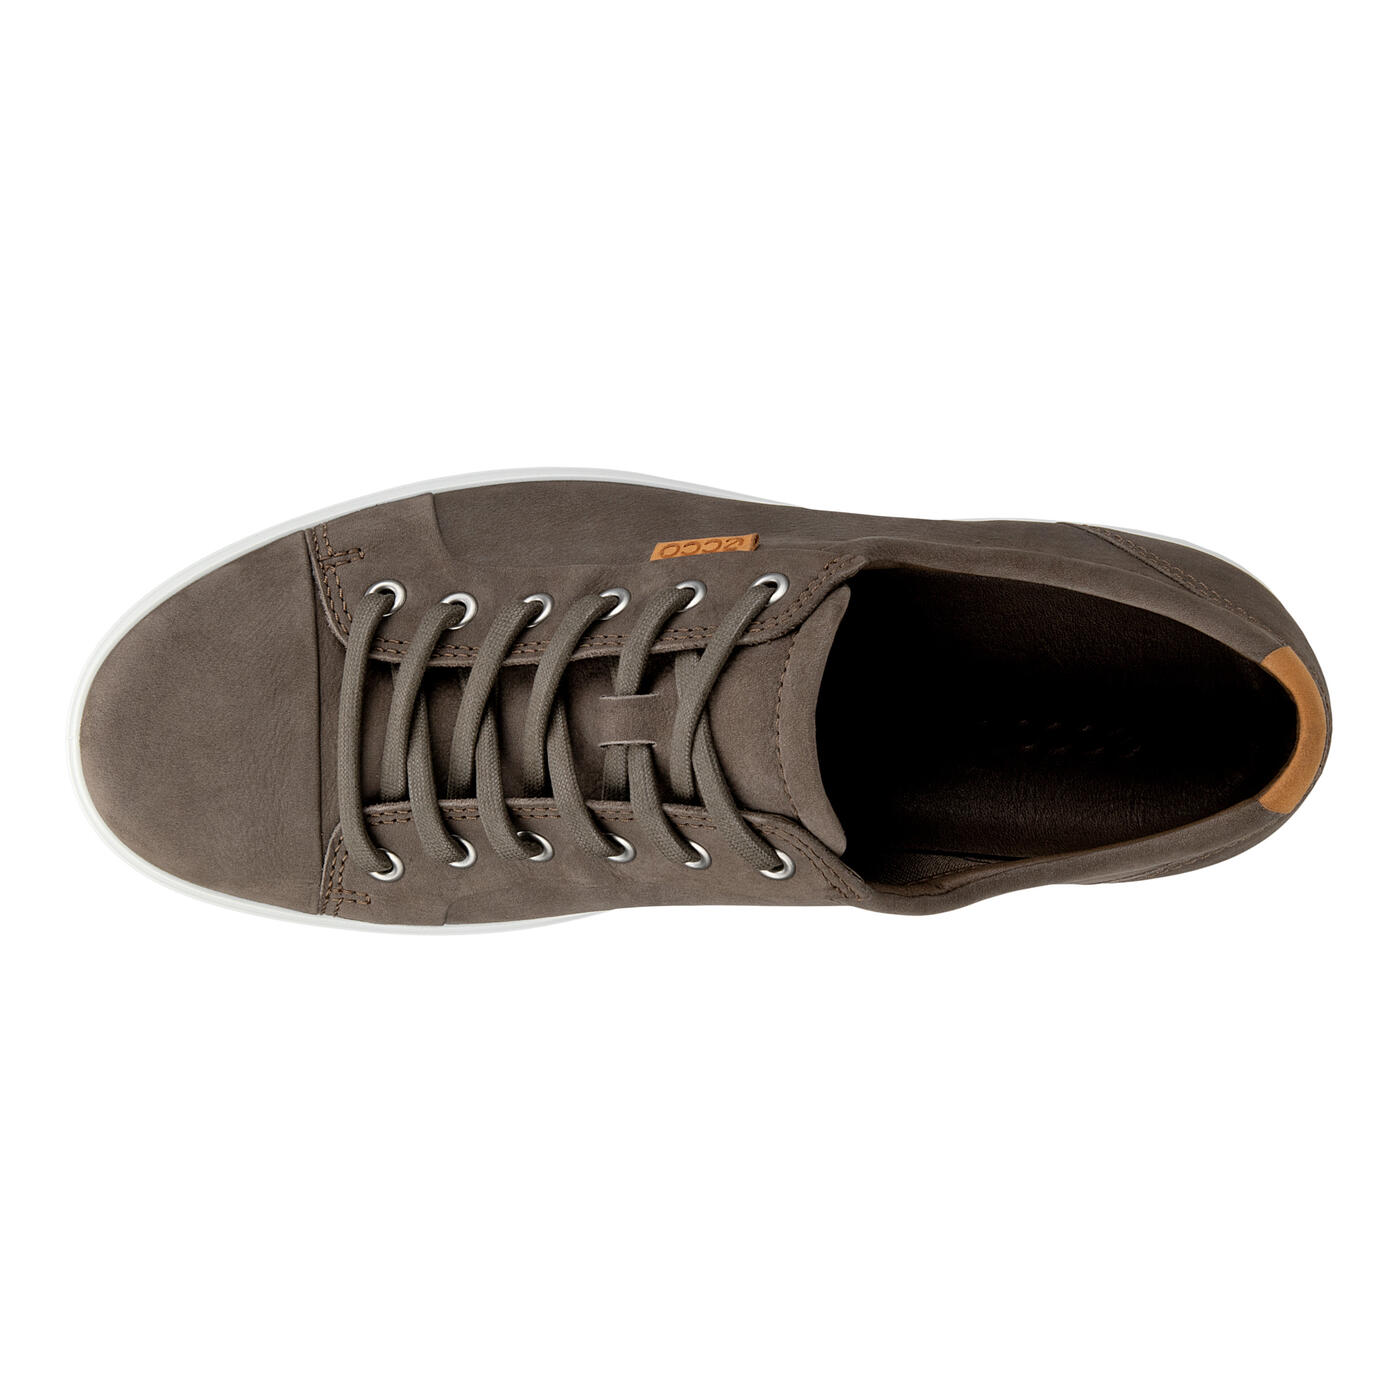 Men's Ecco Soft 7 Sneaker - Dark Clay